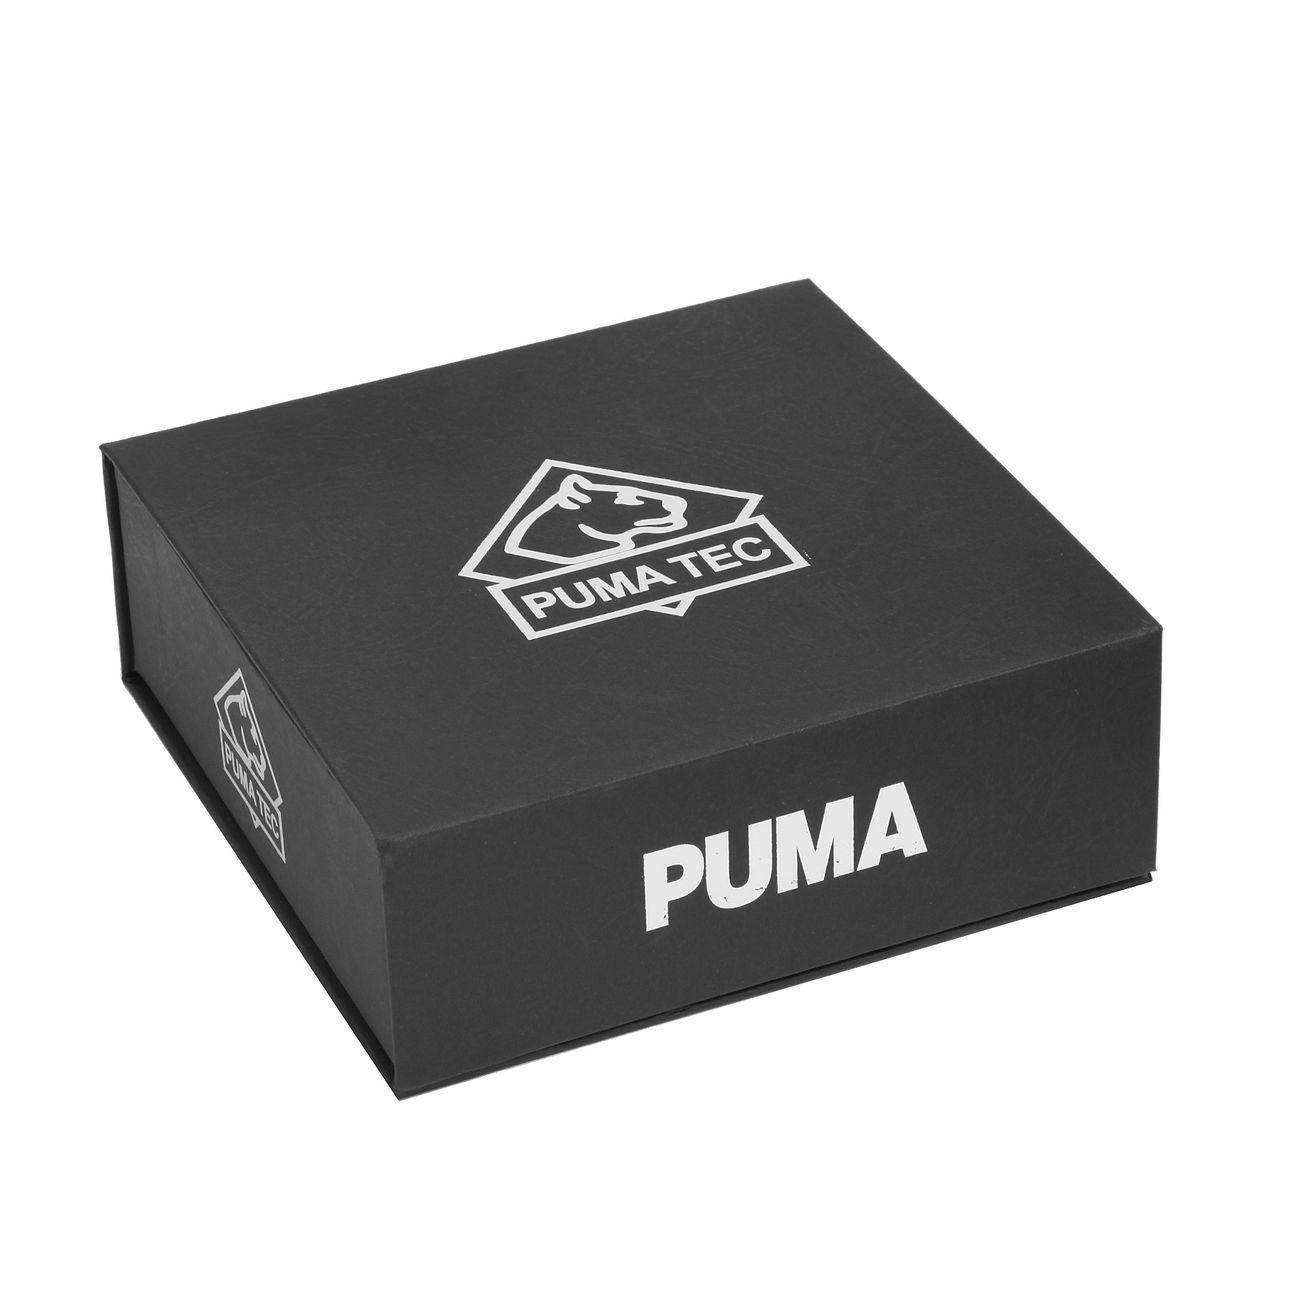 Puma TEC Multitool Bild 1